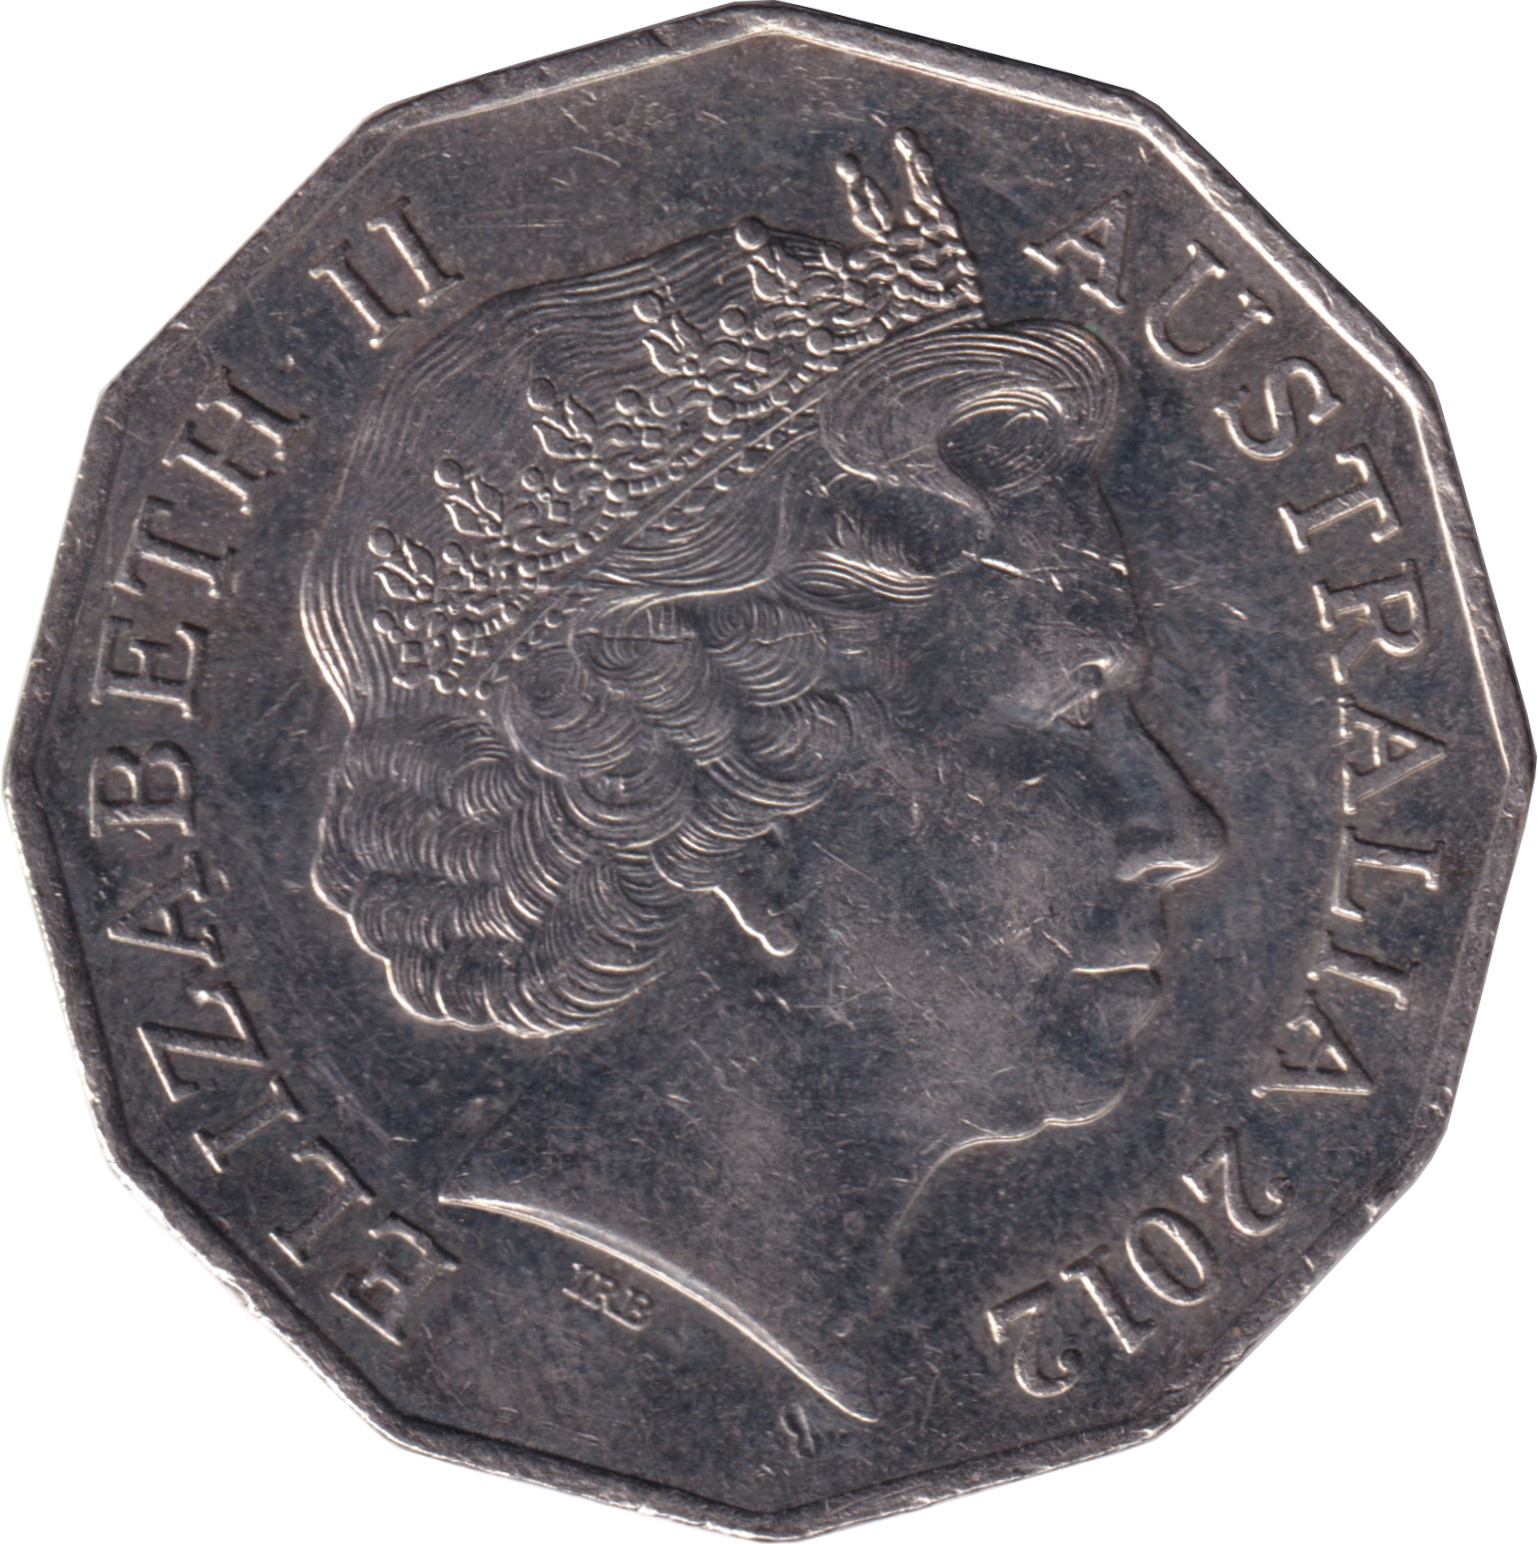 50 cents - Elizabeth II - Old head